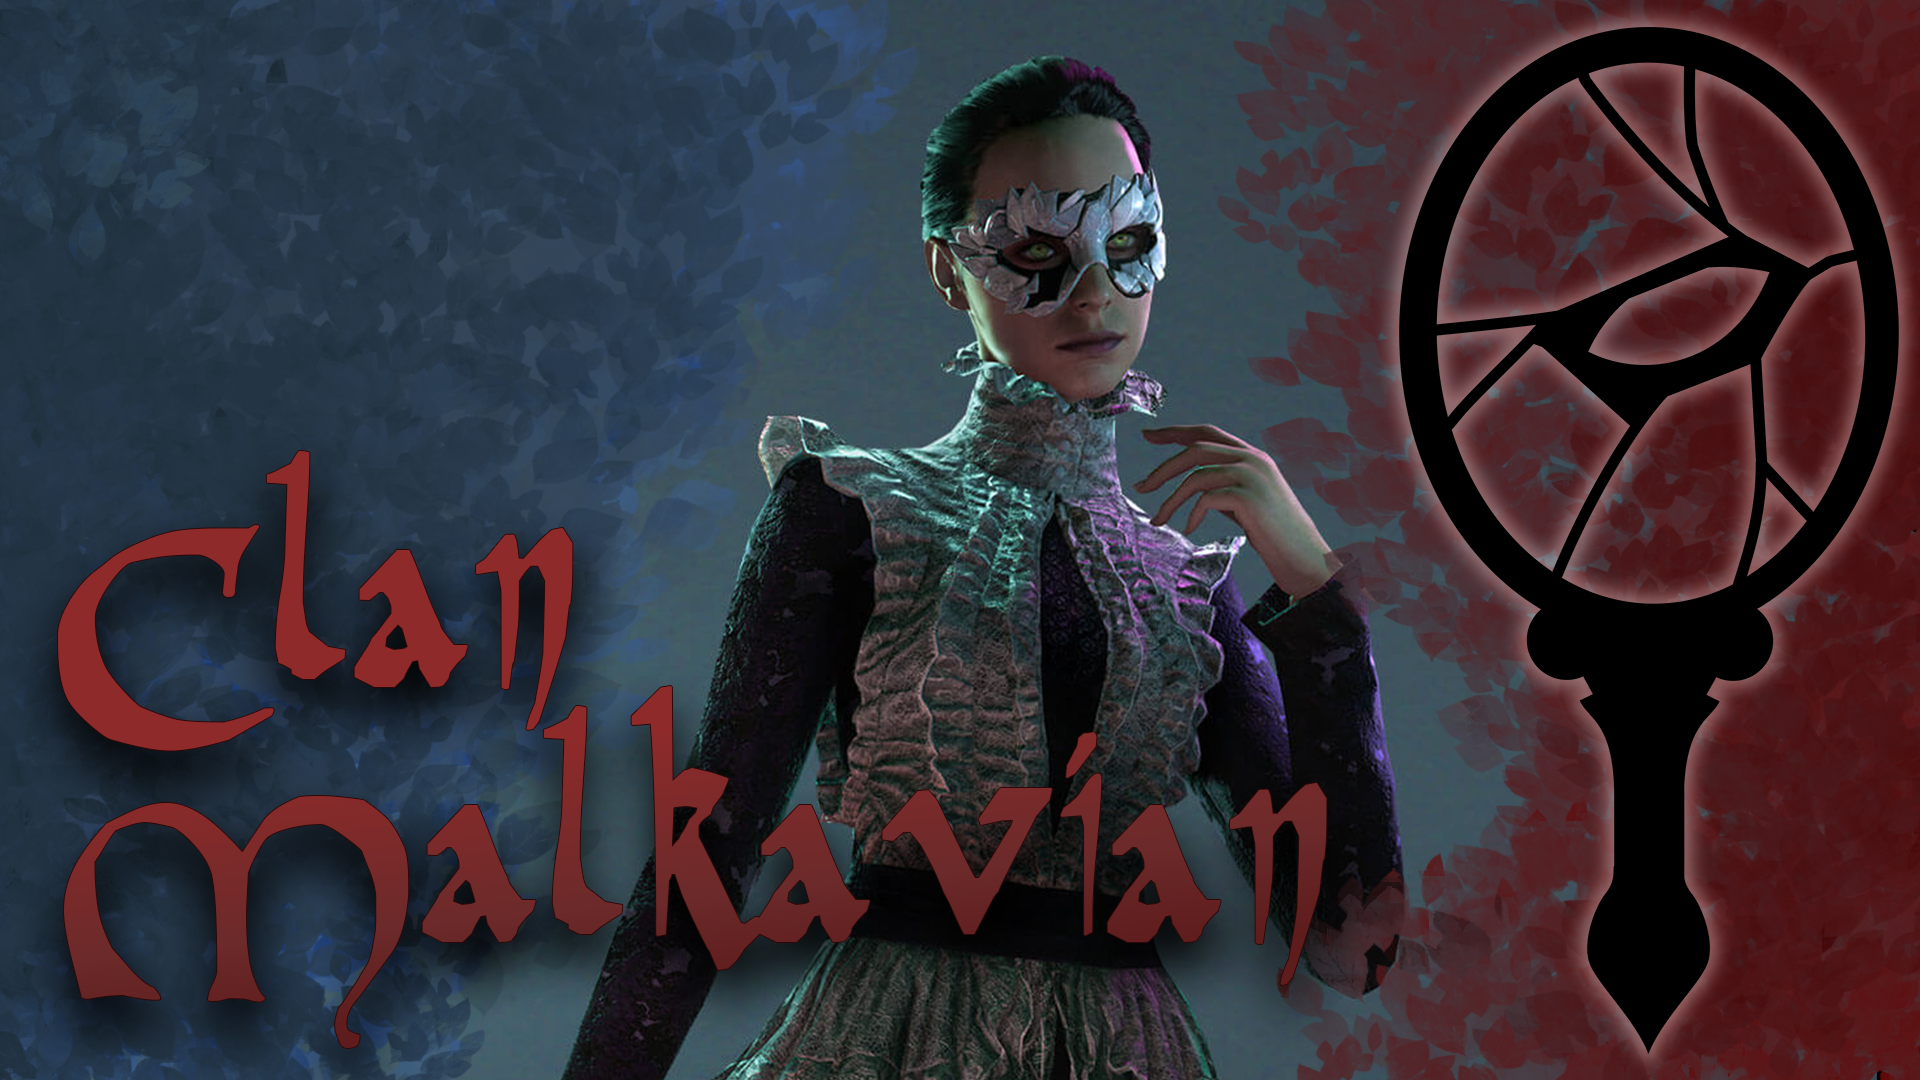 Vampire: The Masquerade - Bloodlines 2 reveal Malkavian clan